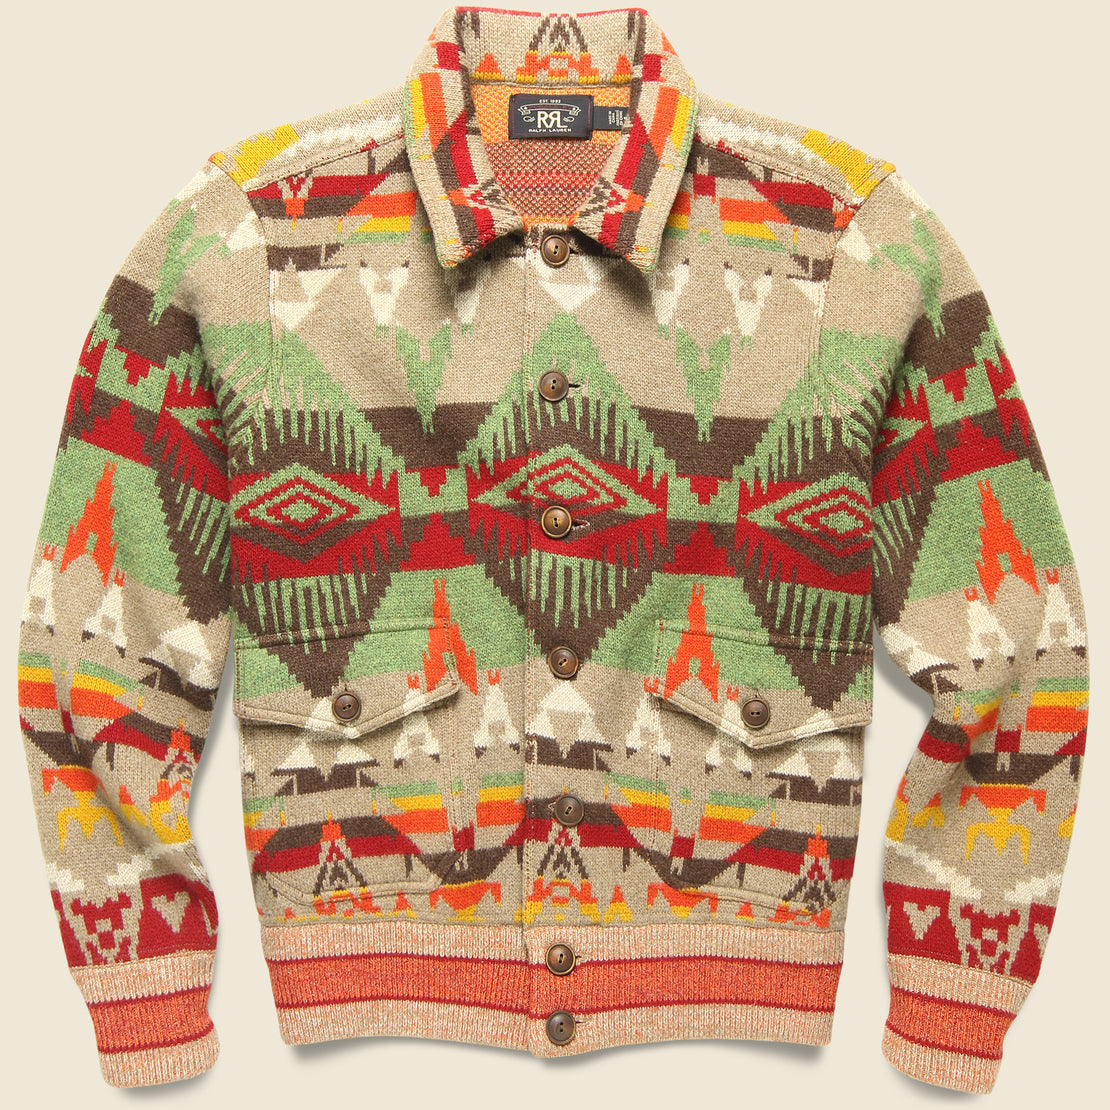 RRL Jacquard Wool Sweater Jacket - Tan/Red/Multi